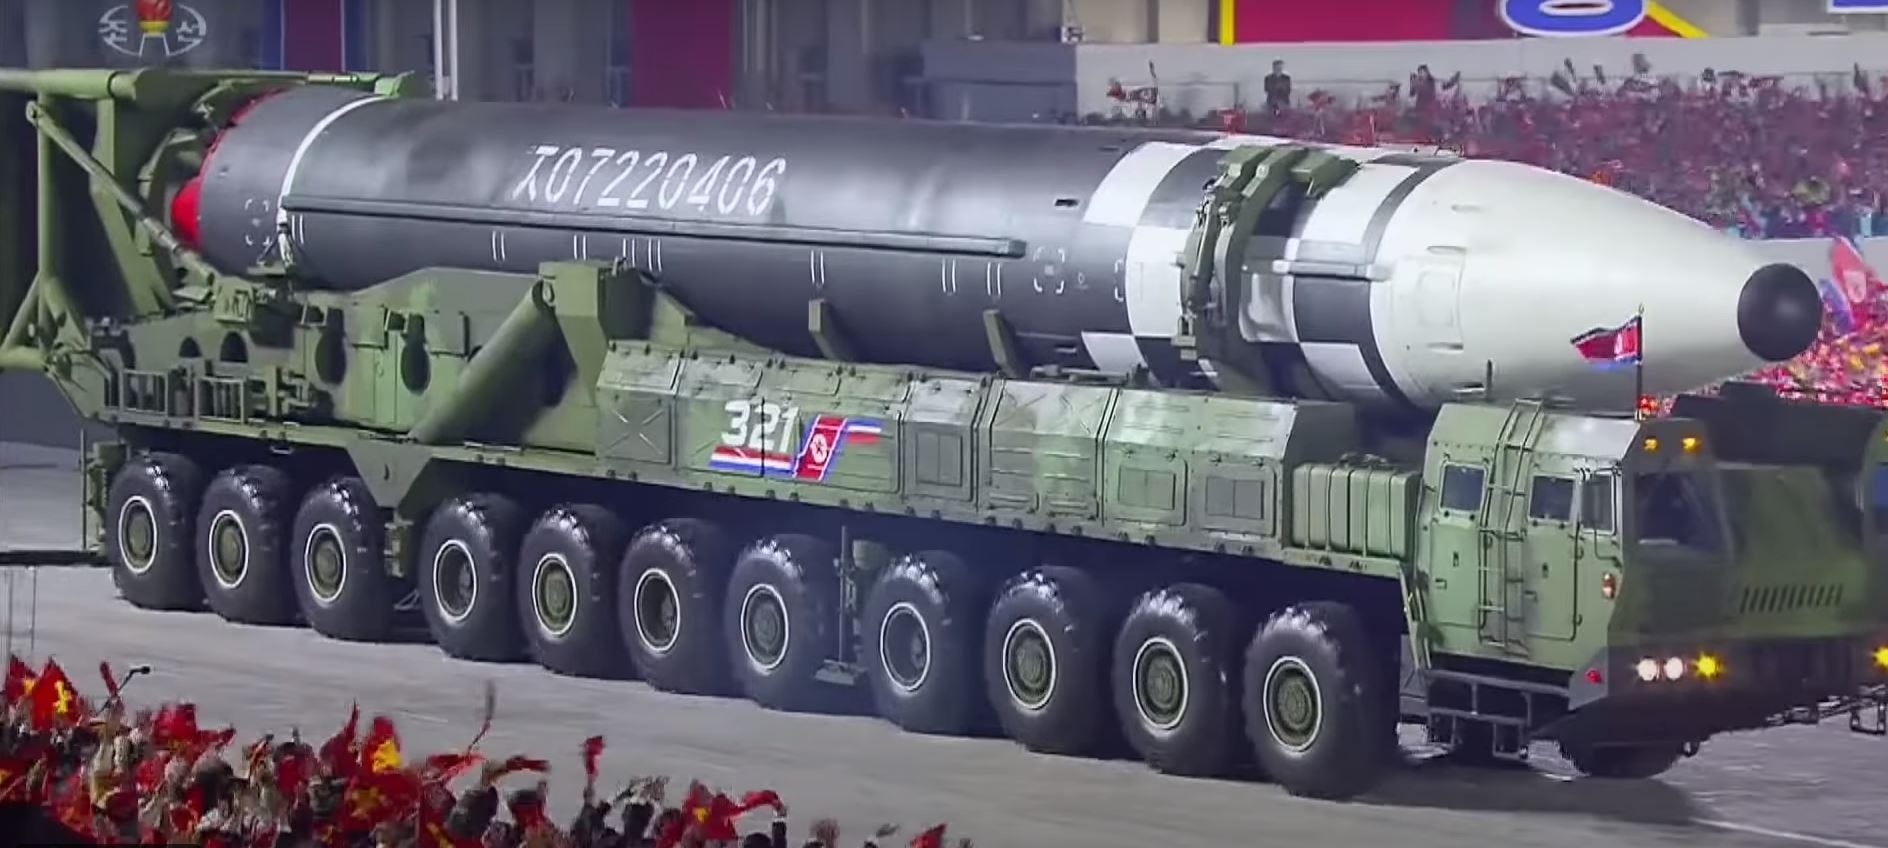 North Korea's new intercontinental ballistic missile